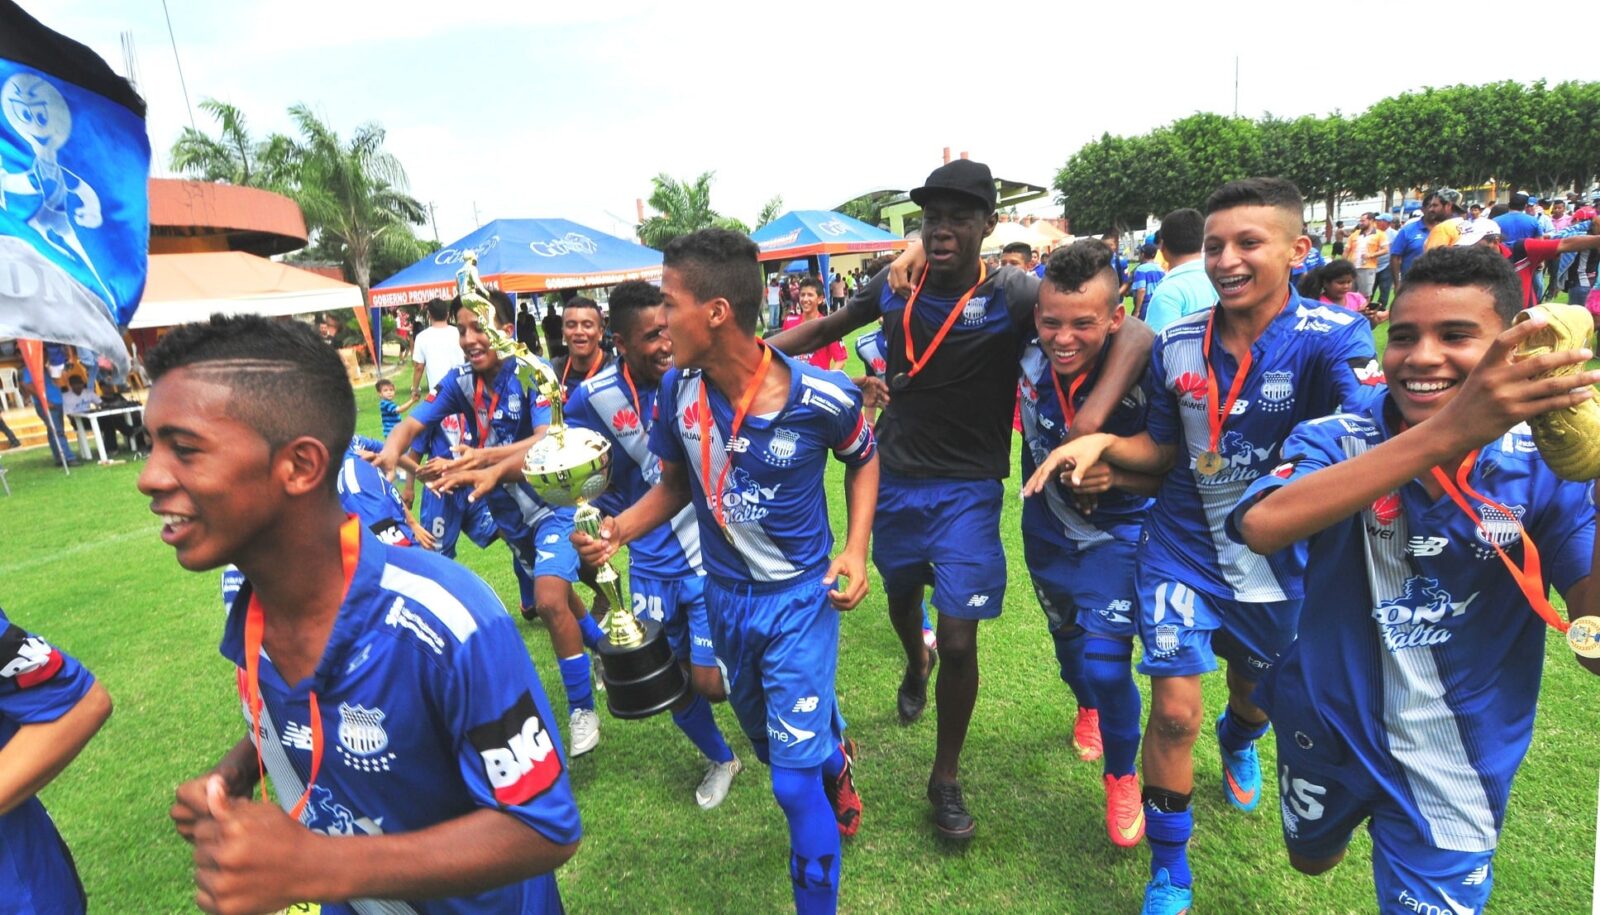 emelec obtuvo la victoria en el torneo juvenil “guayas cup”